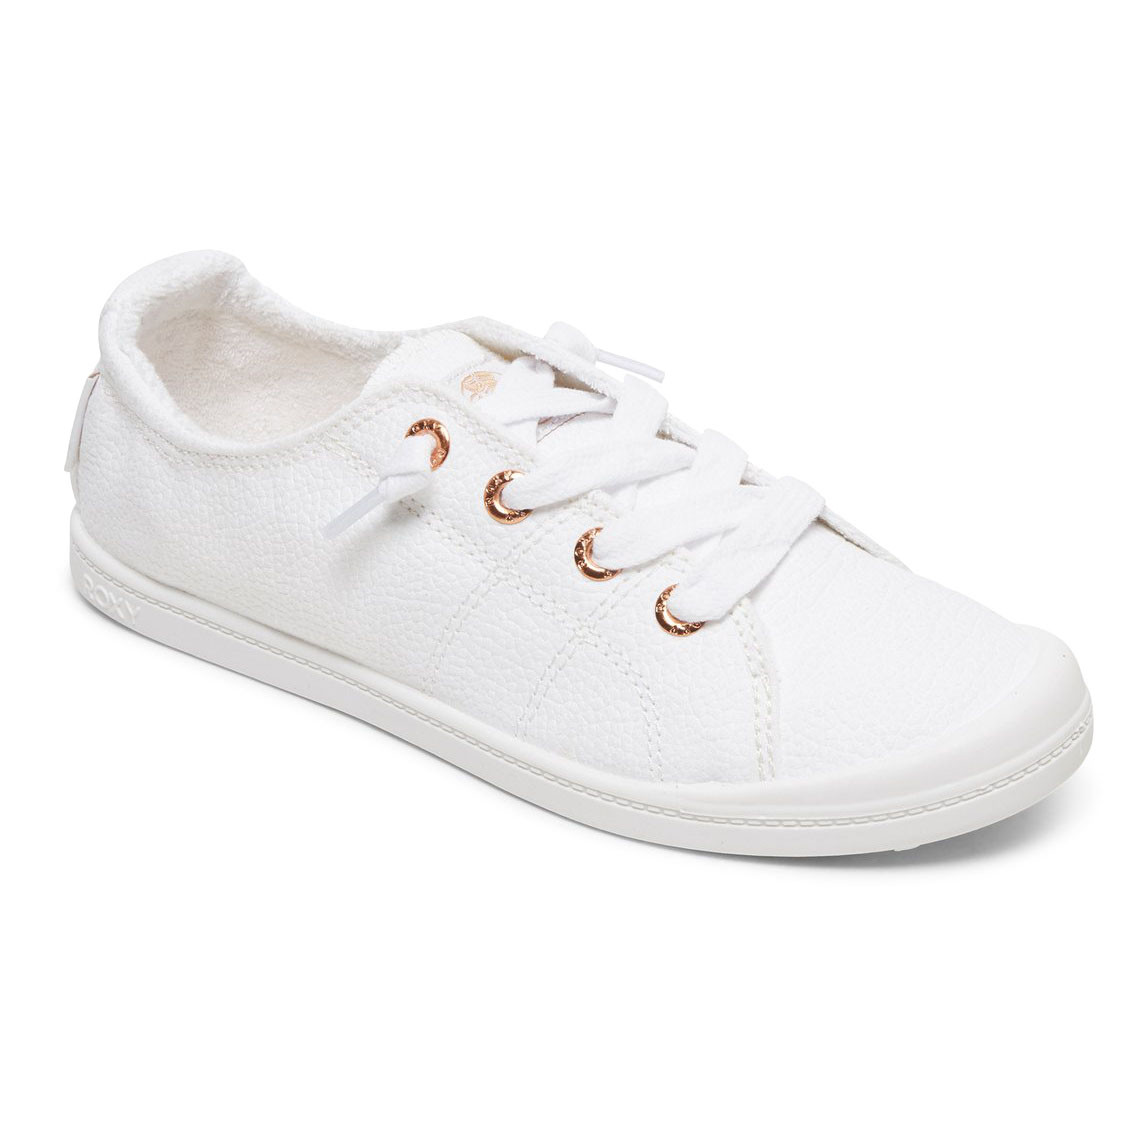 Sneakers Roxy Bayshore III white/aurora 